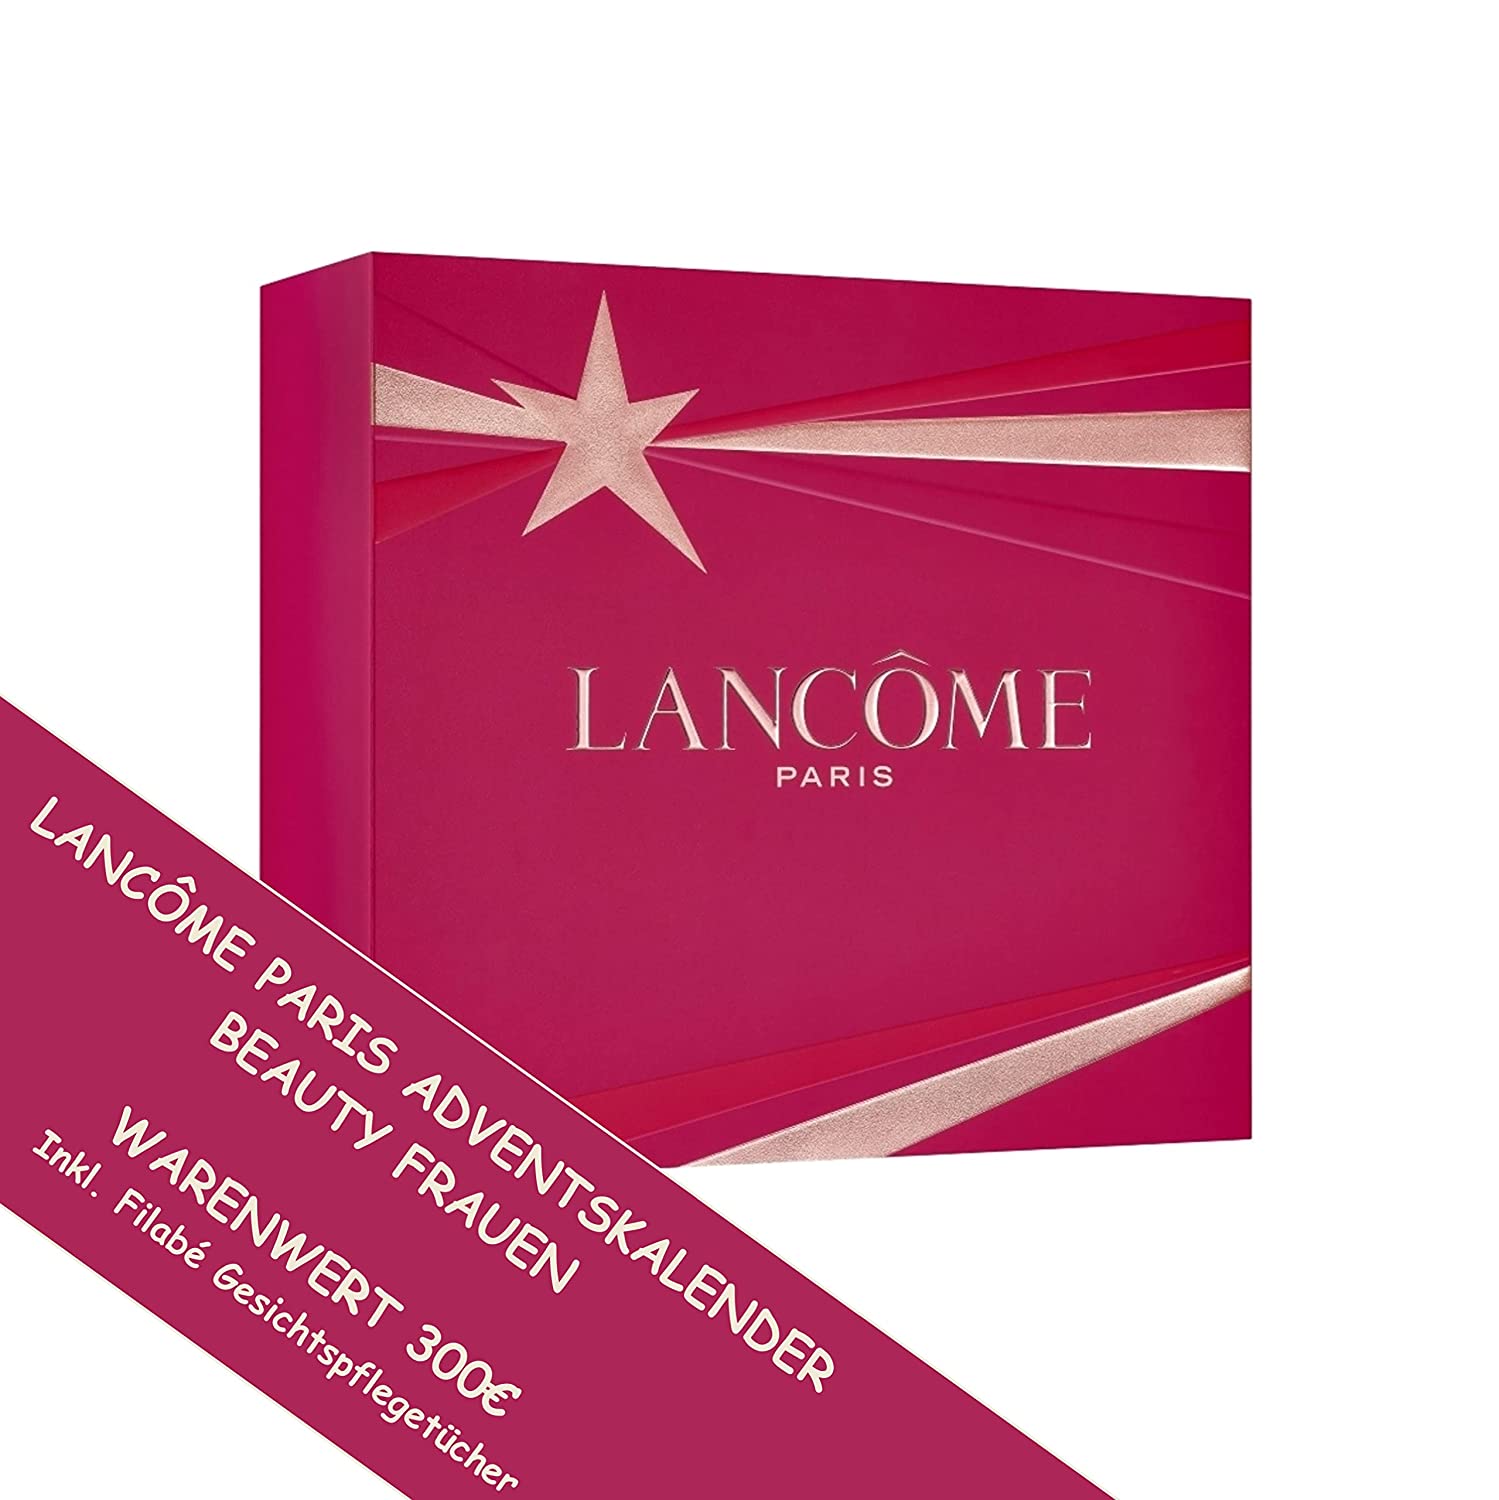 LANCOME Adventskalender 2021 Beauty - Frauen Kosmetik Advent Kalender Lan Come, 24 Geschenke Wert 300€, Pflege Weihnachtskalender Frau, Adventkalender